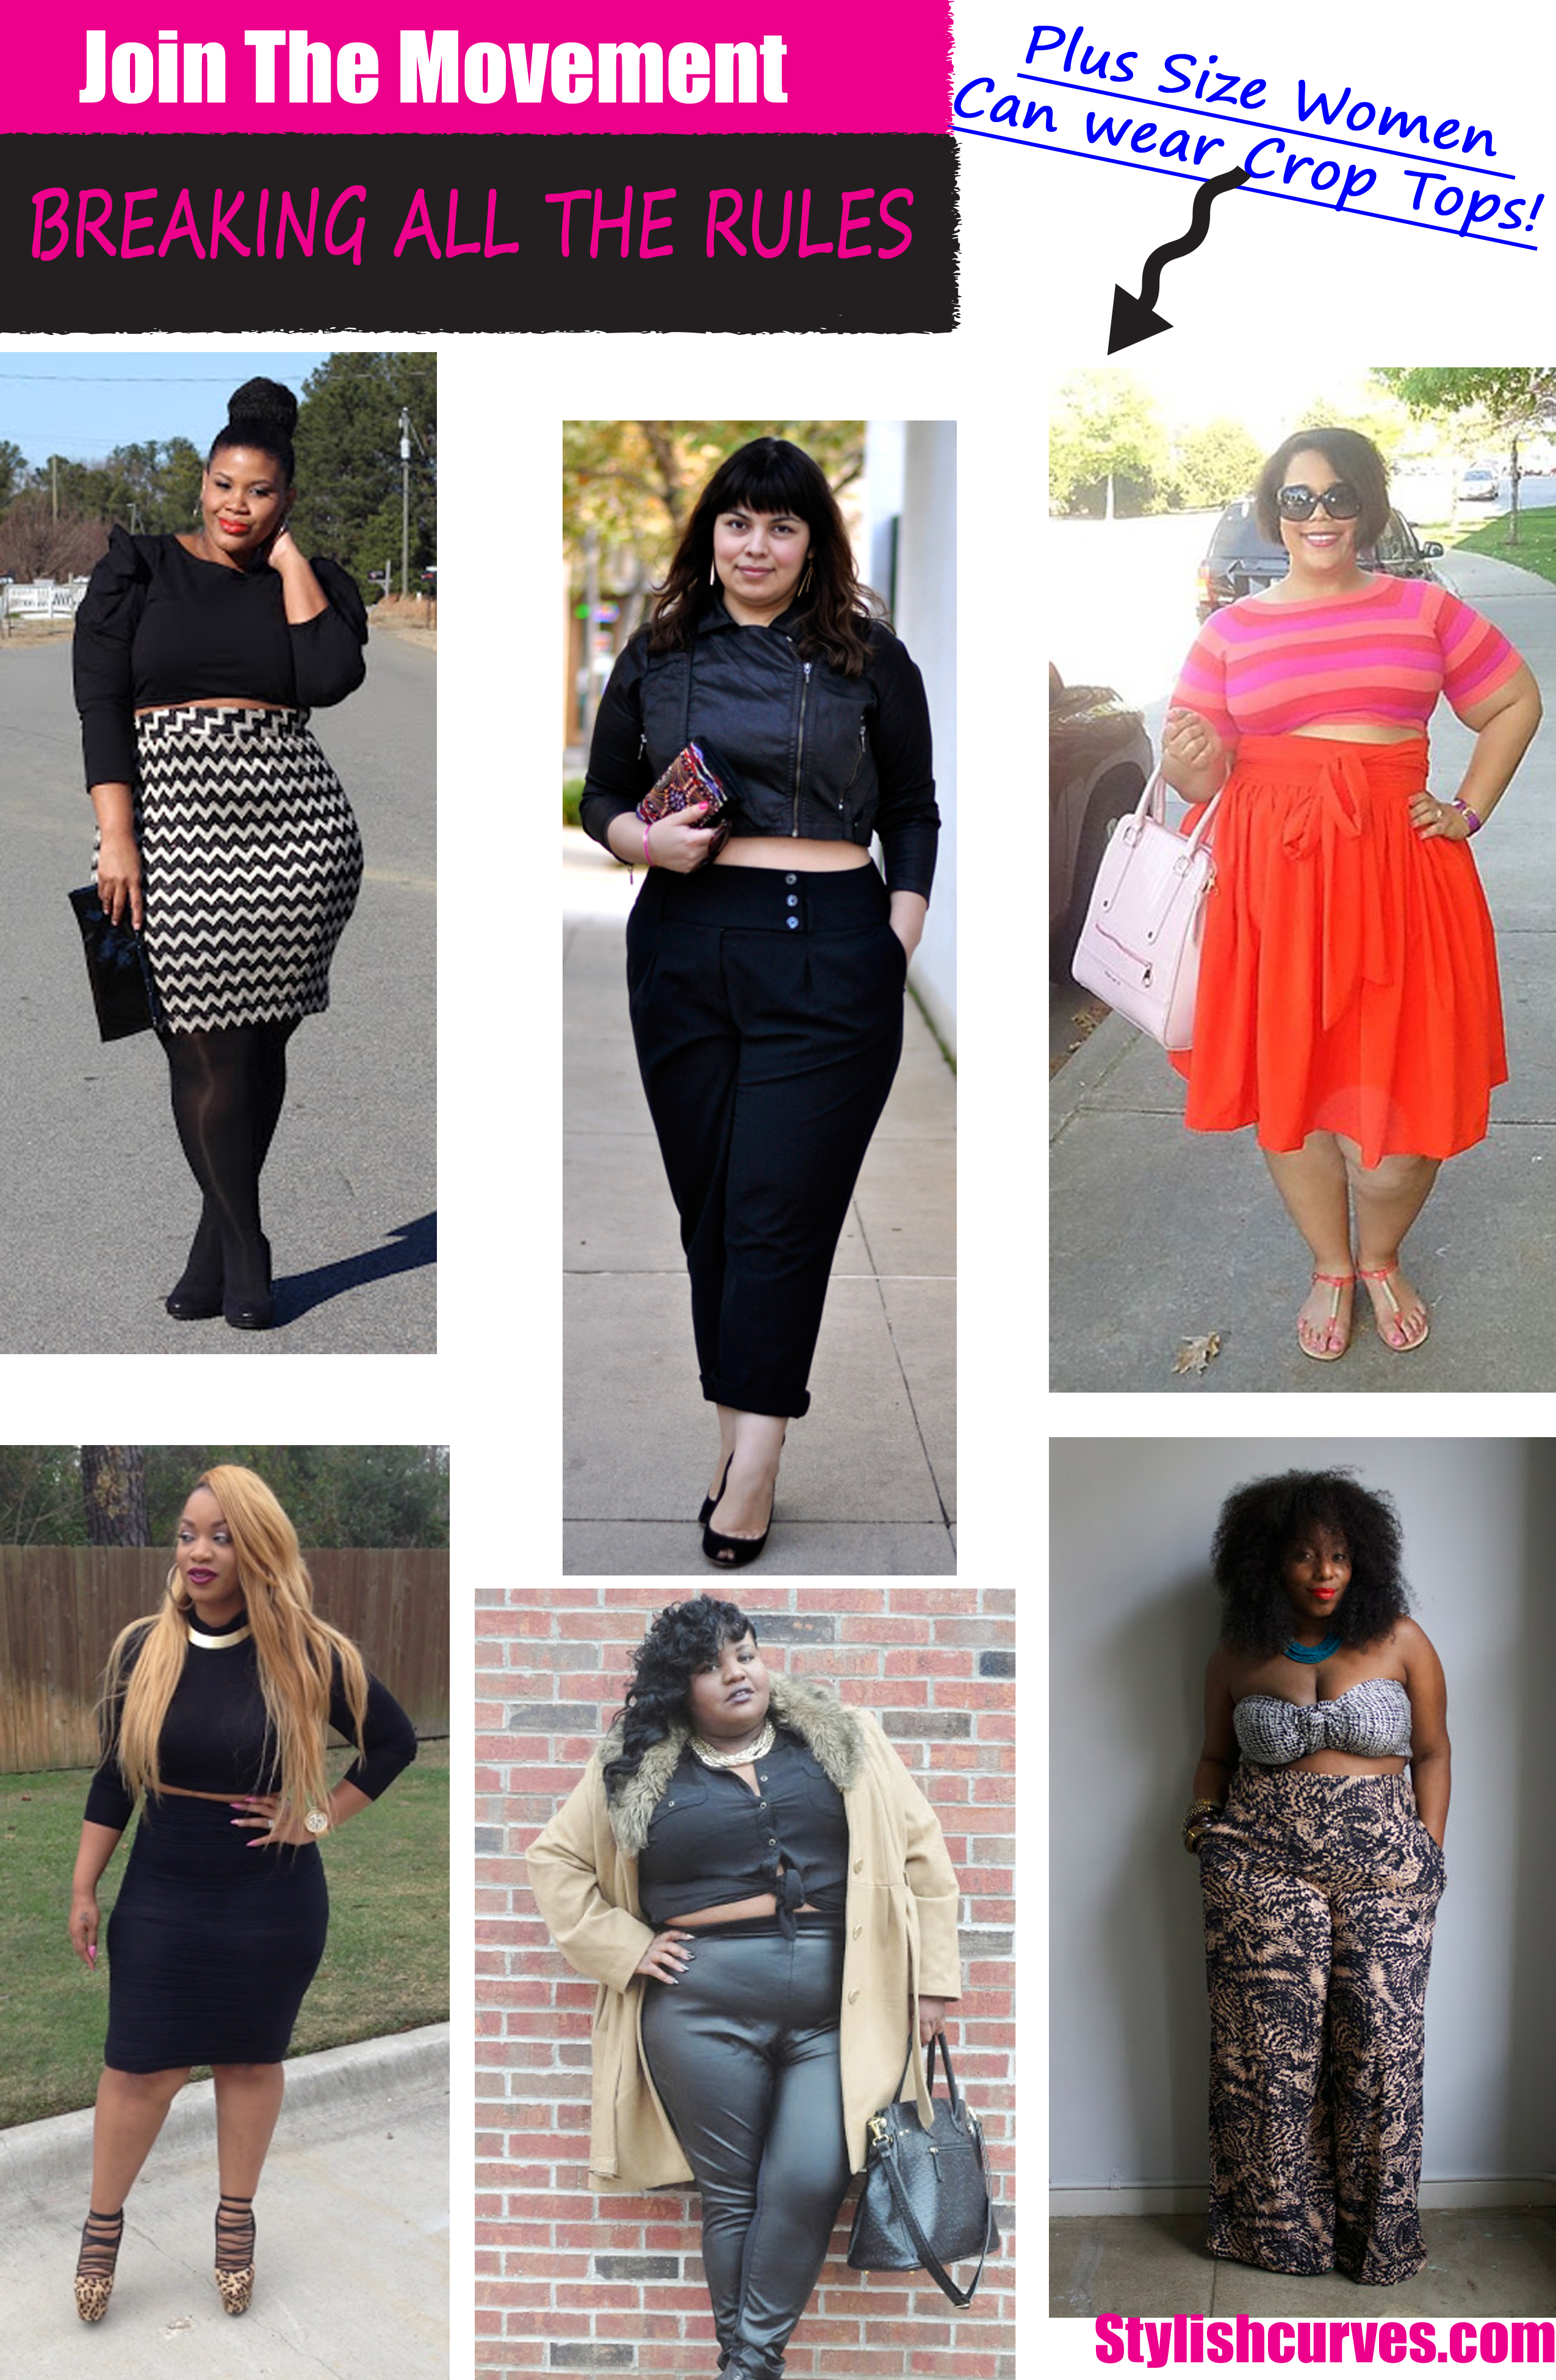 15 Ways Plus Size Women Are Wearing Crop Tops [Gallery]